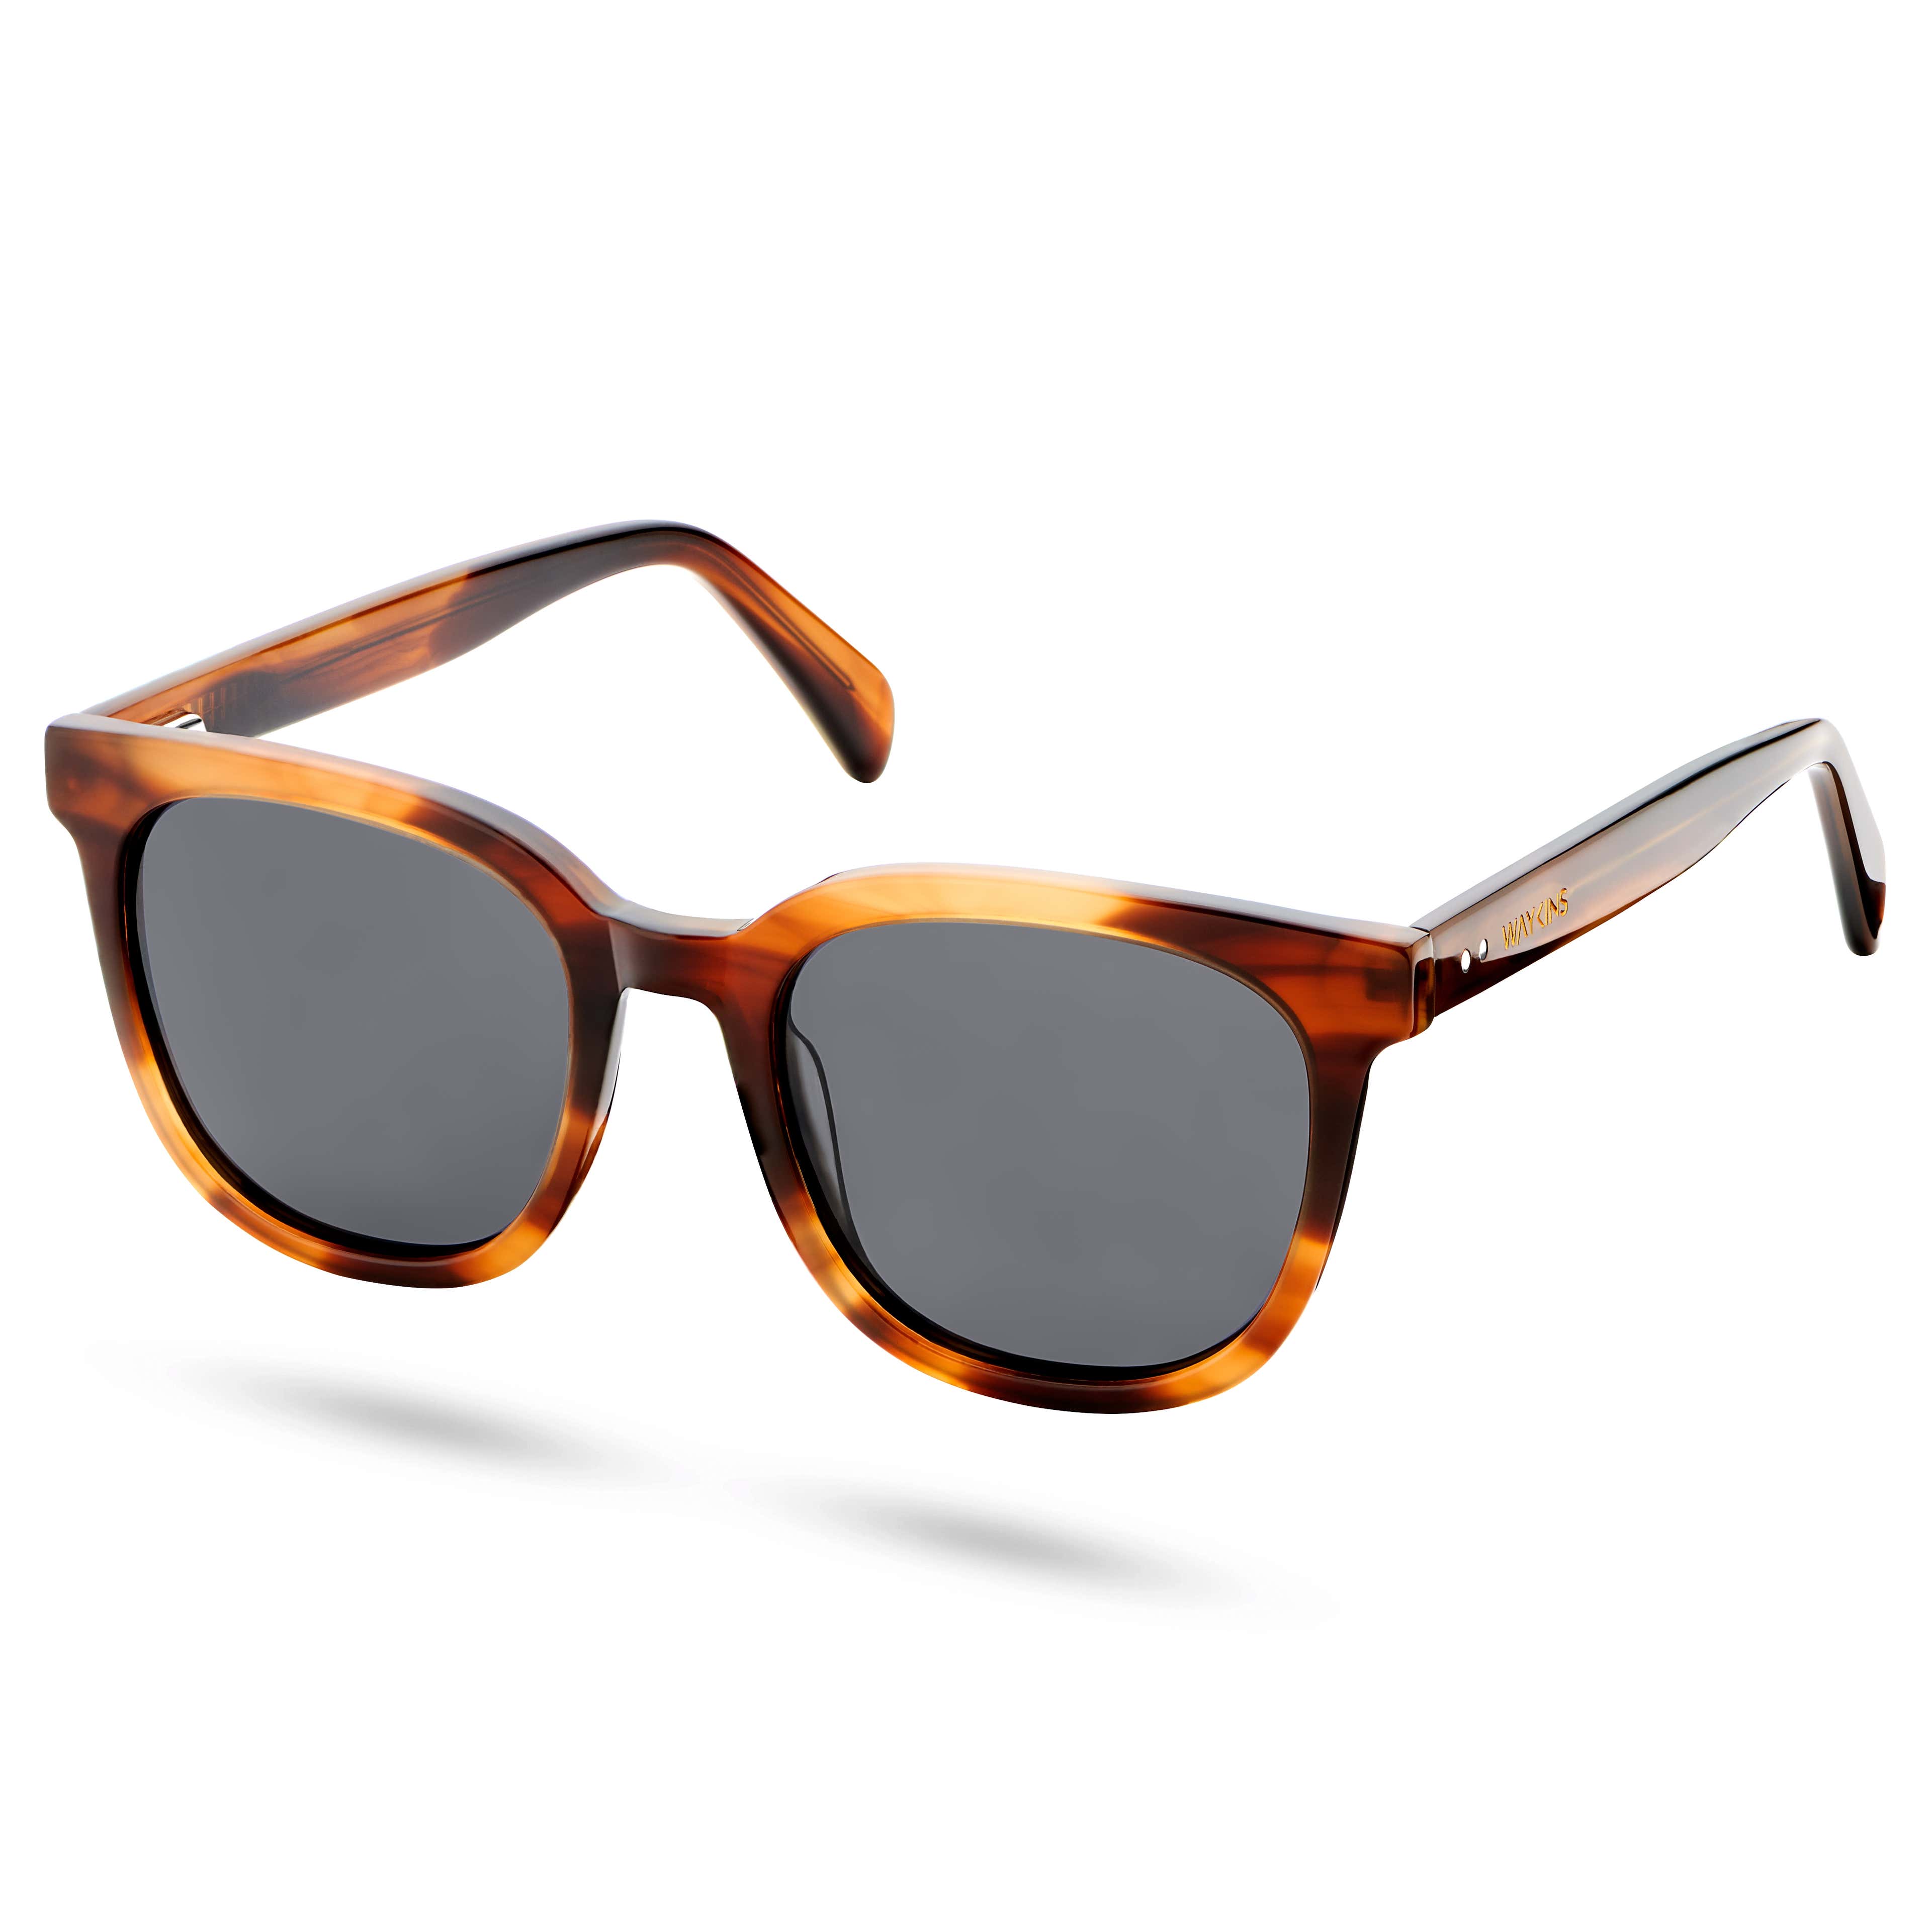 Retro Tortoiseshell Polarised Smokey Sunglasses